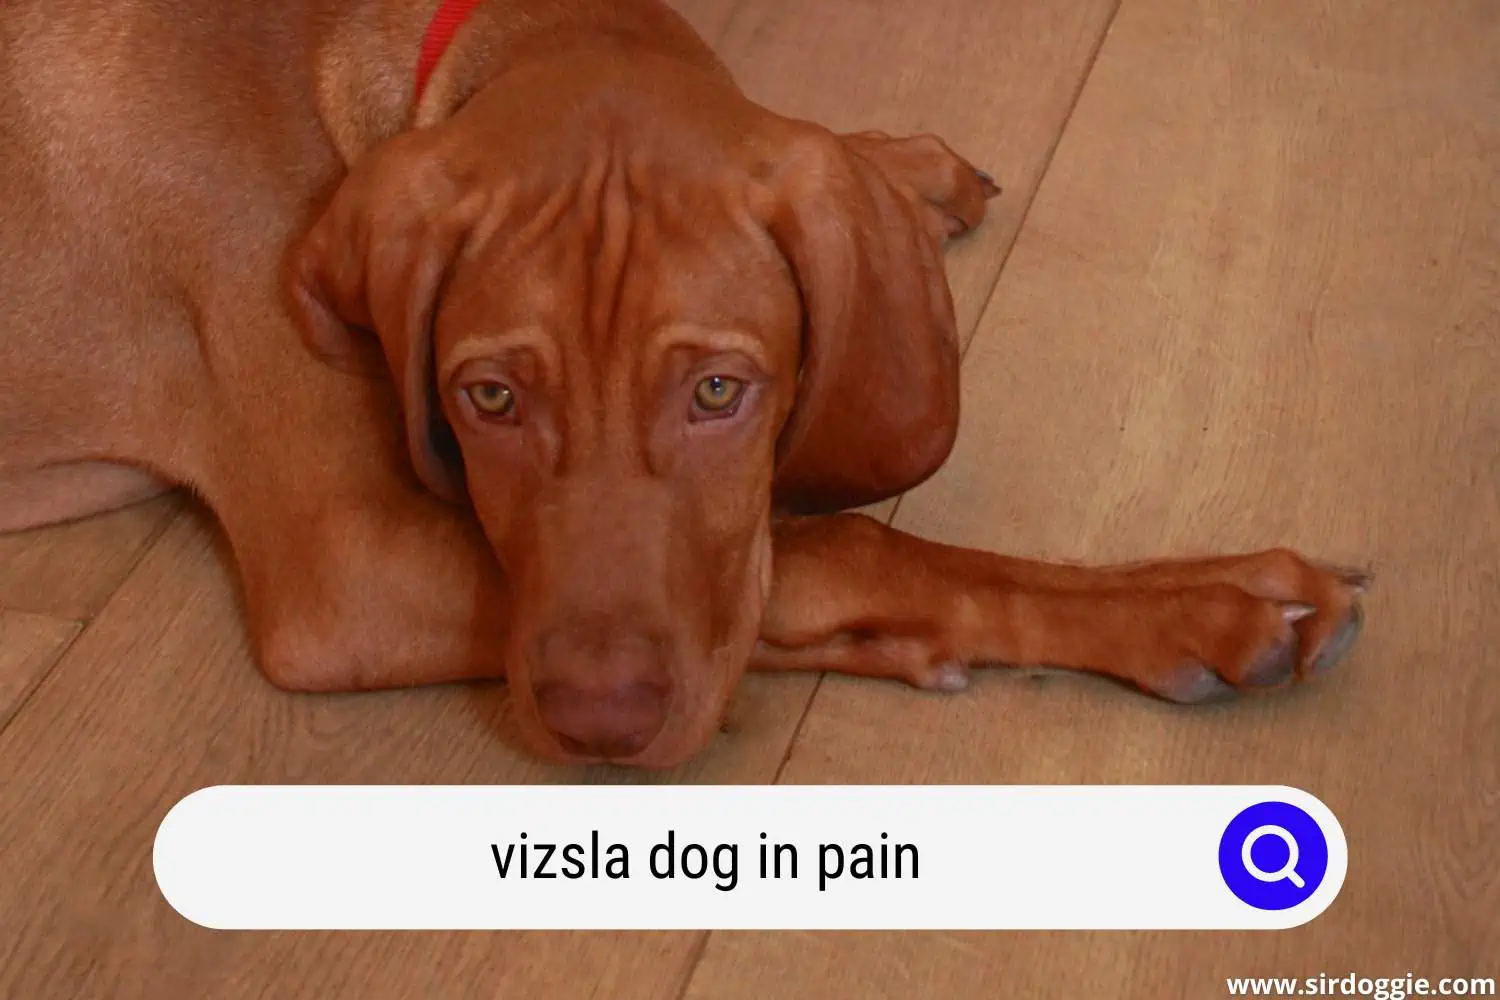 Sad Vizsla dog lying on the floor